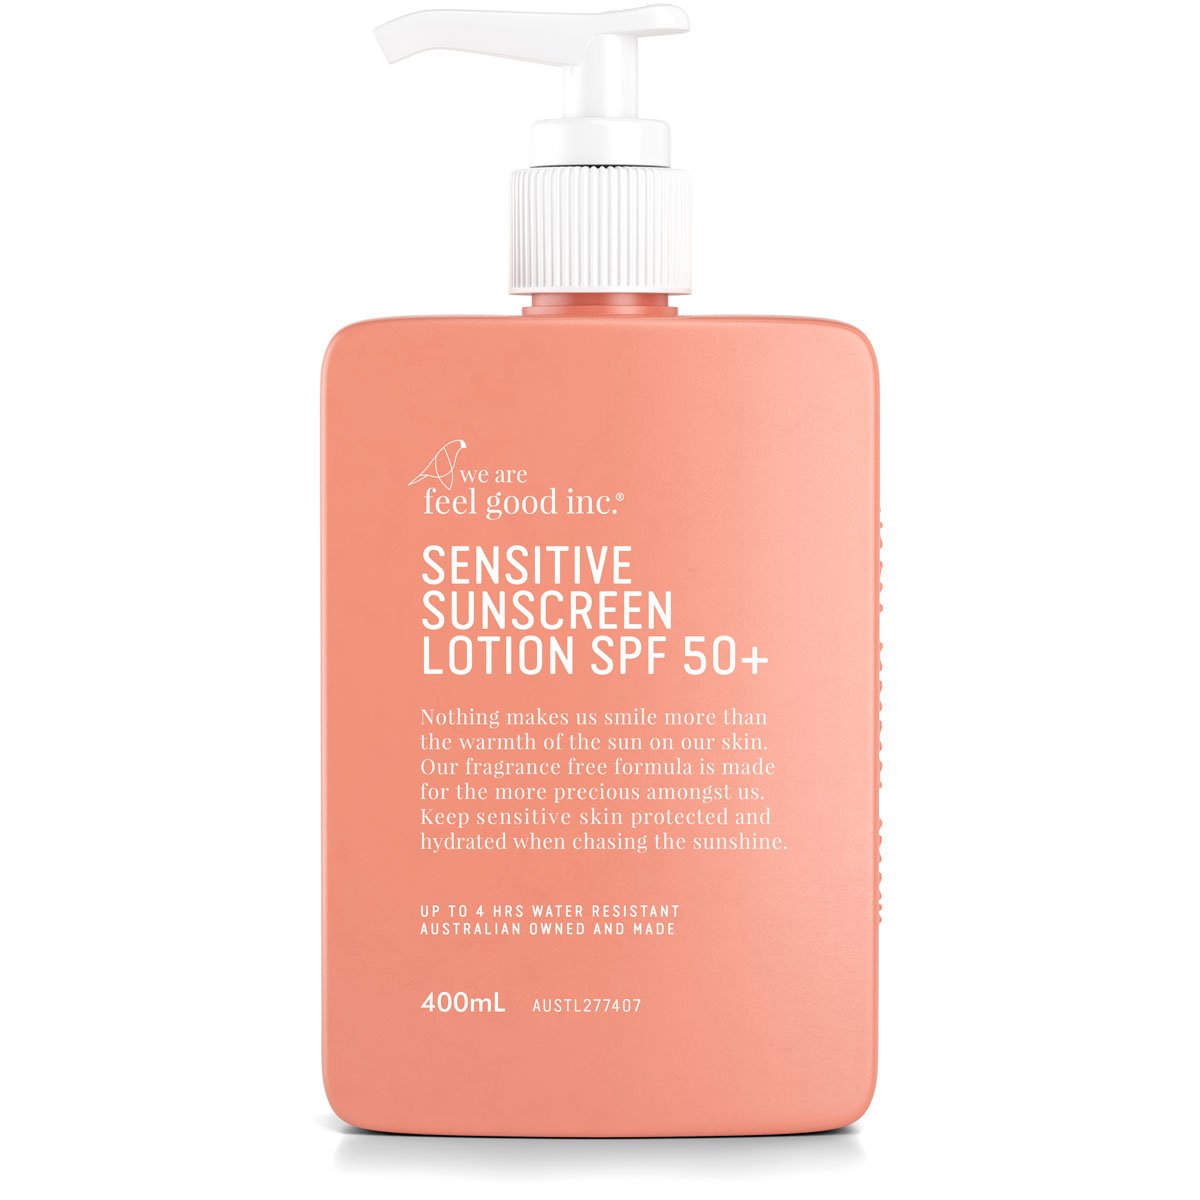 Sensitive Sunscreen SPF 50+ - We Are Feel Good Inc.